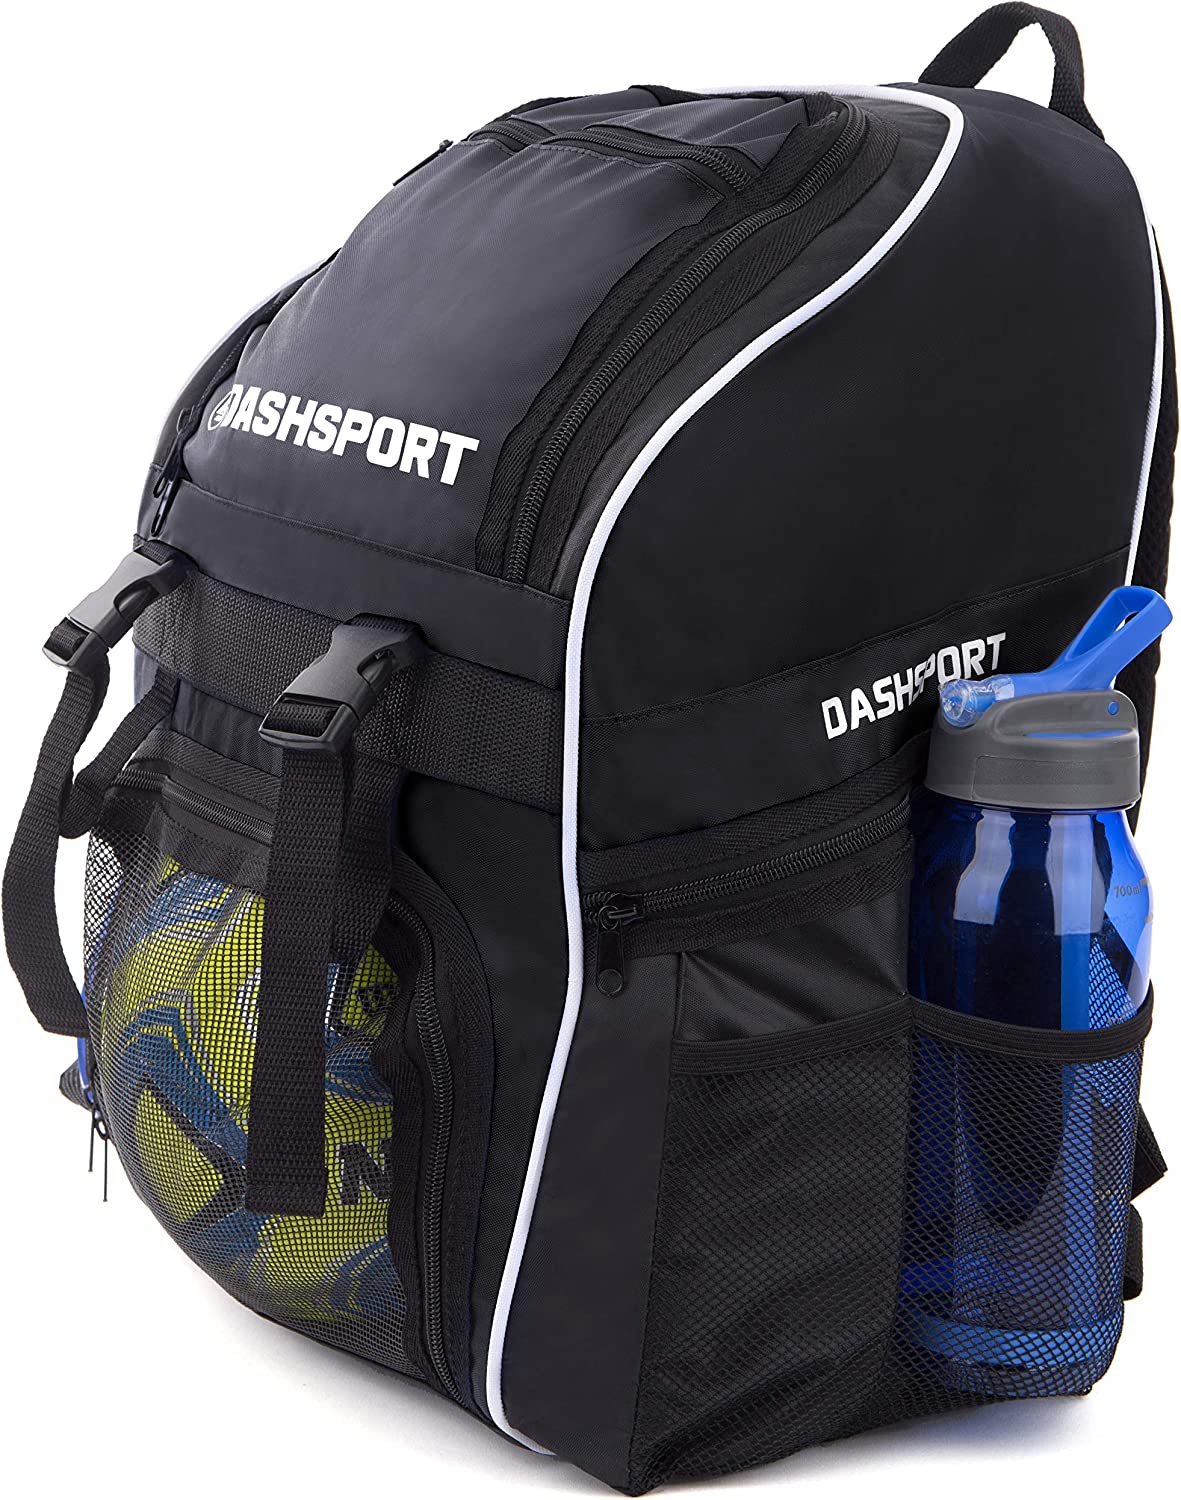 DashSport Youth Soccer Backpack